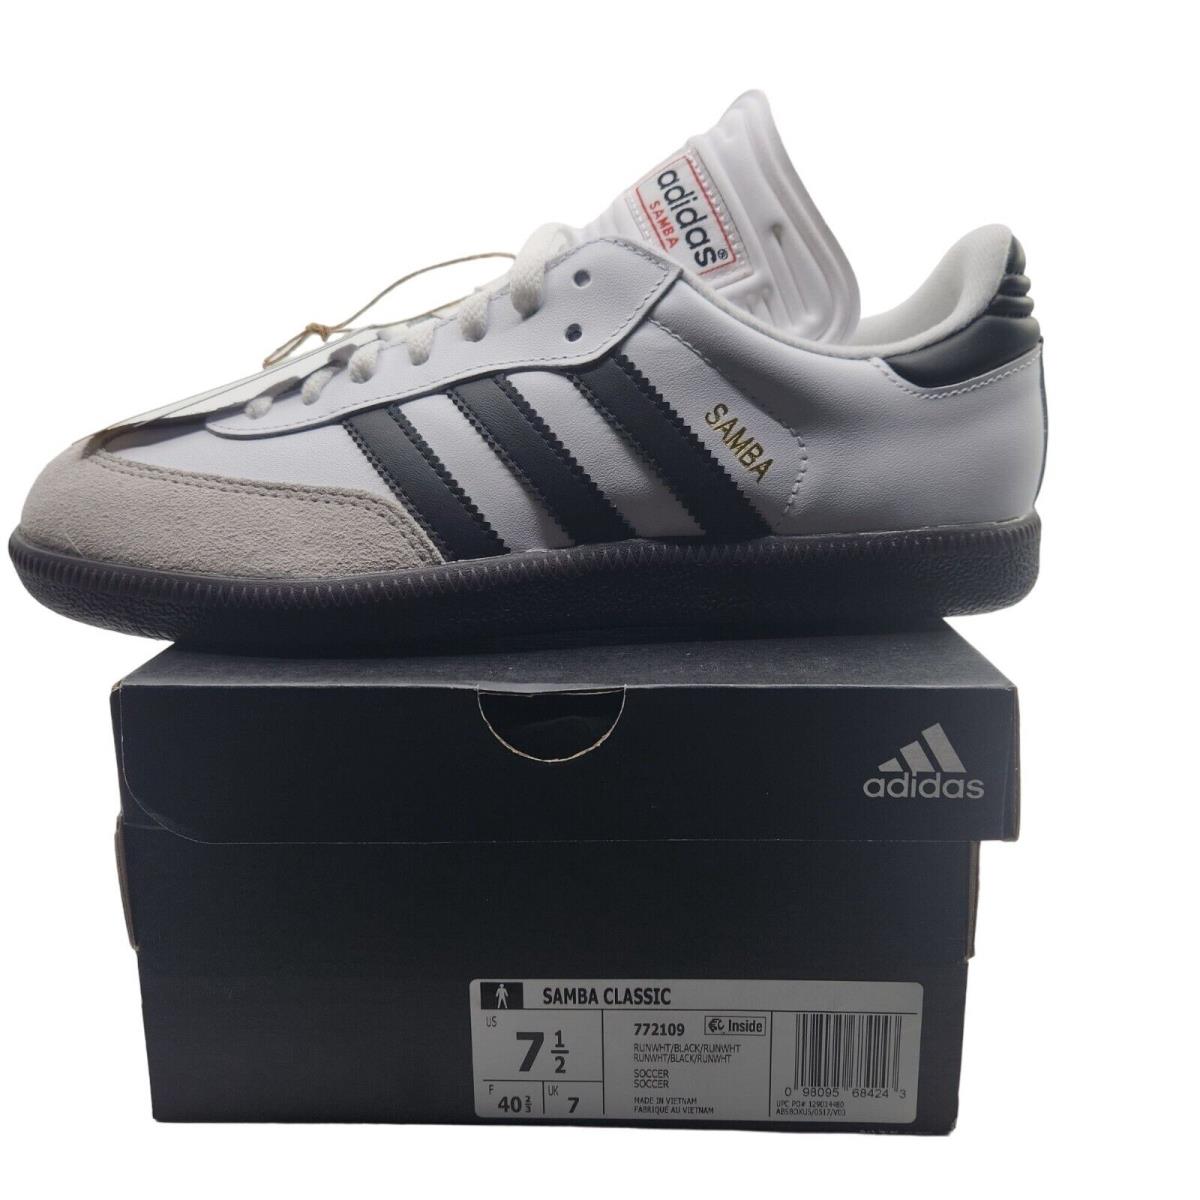 Adidas Samba Classic OG Indoor Soccer Shoe White Trainers Sneaker M 7.5 W 8.5